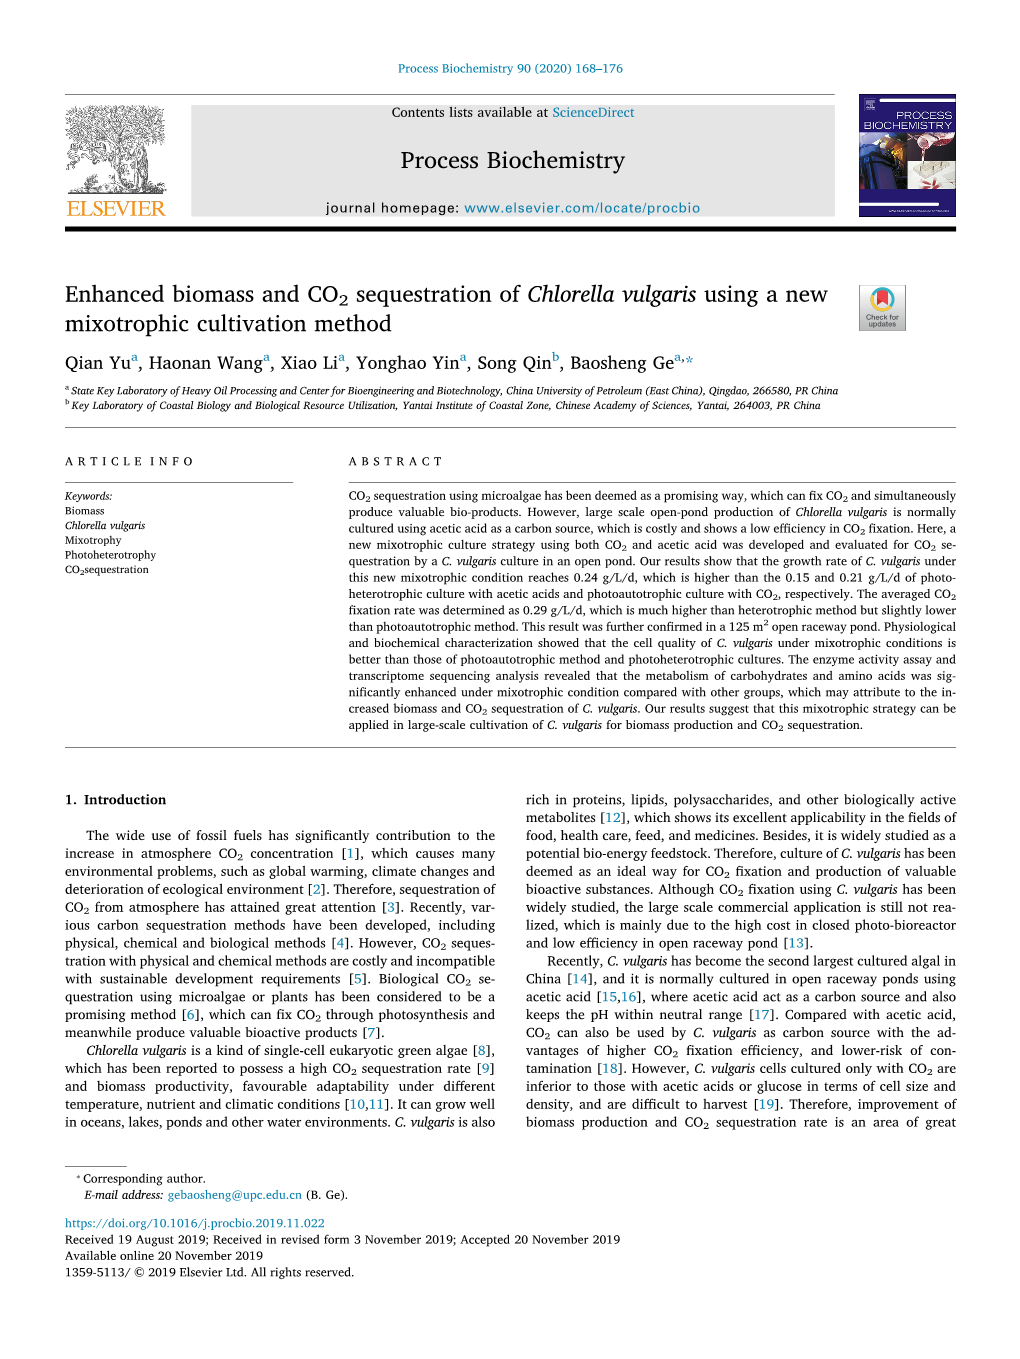 Enhanced Biomass and CO2 Sequestration of Chlorella Vulgaris